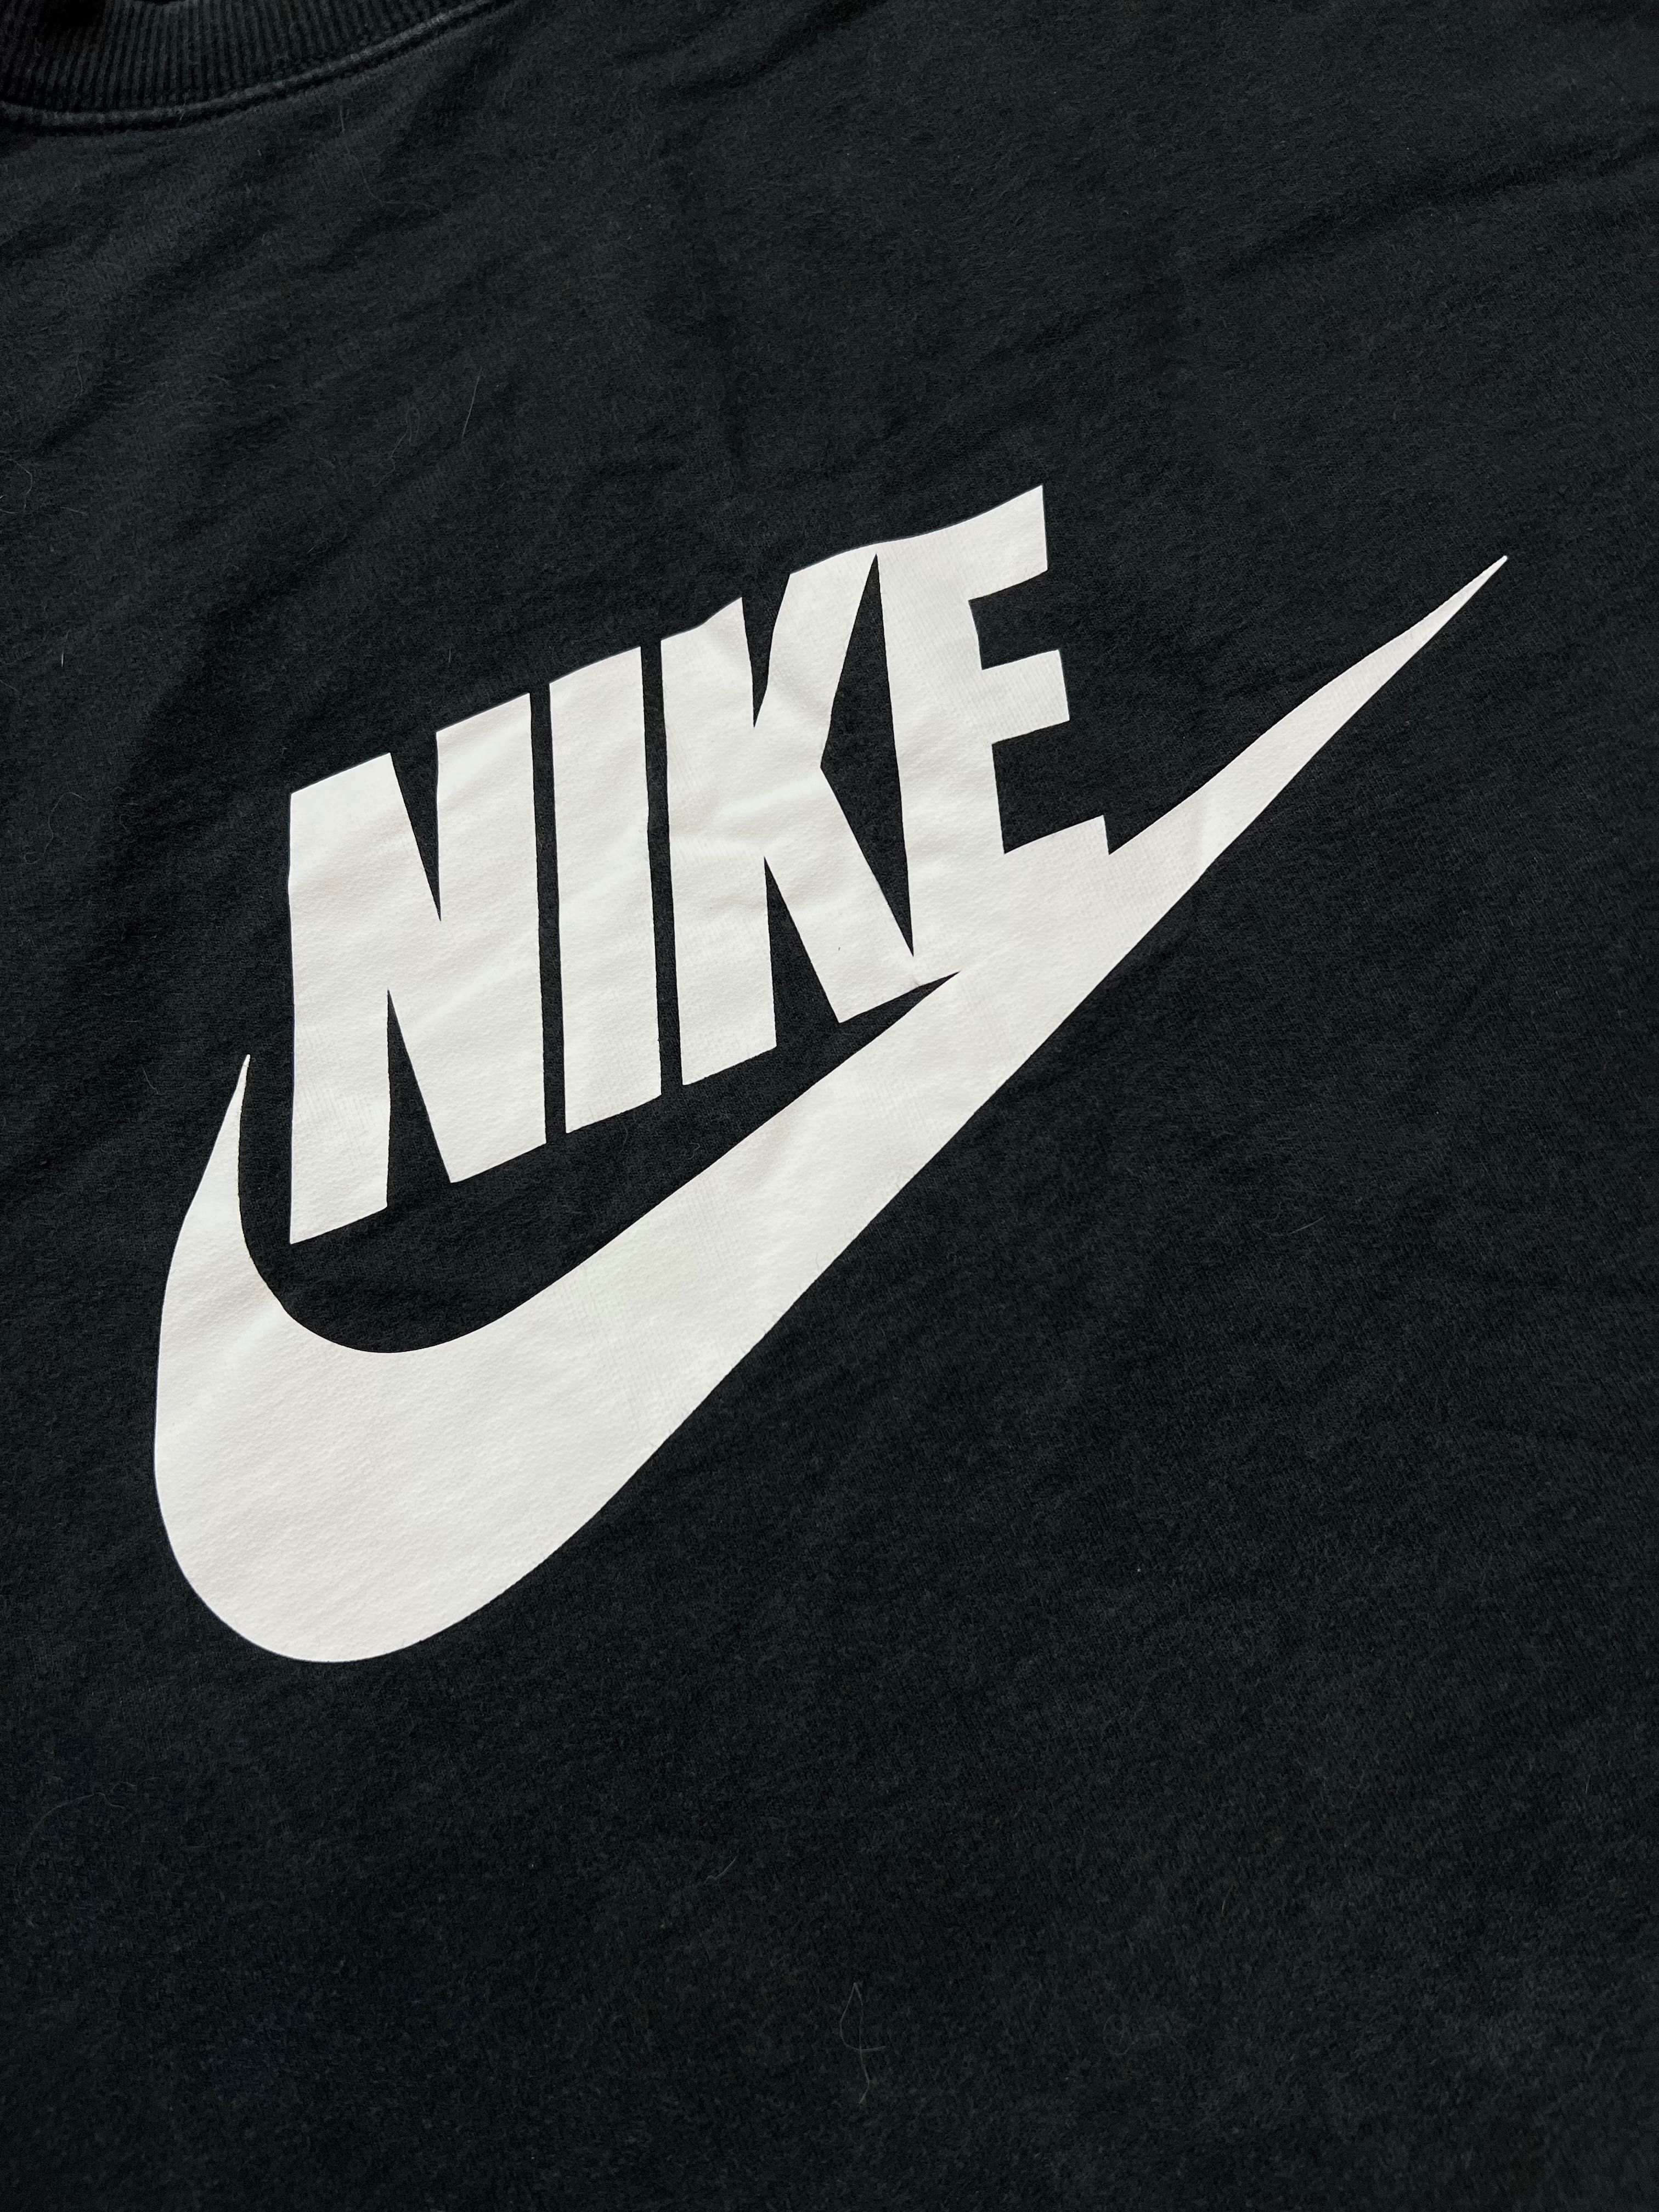 Bluza Nike spellout big logo crop top black oversize